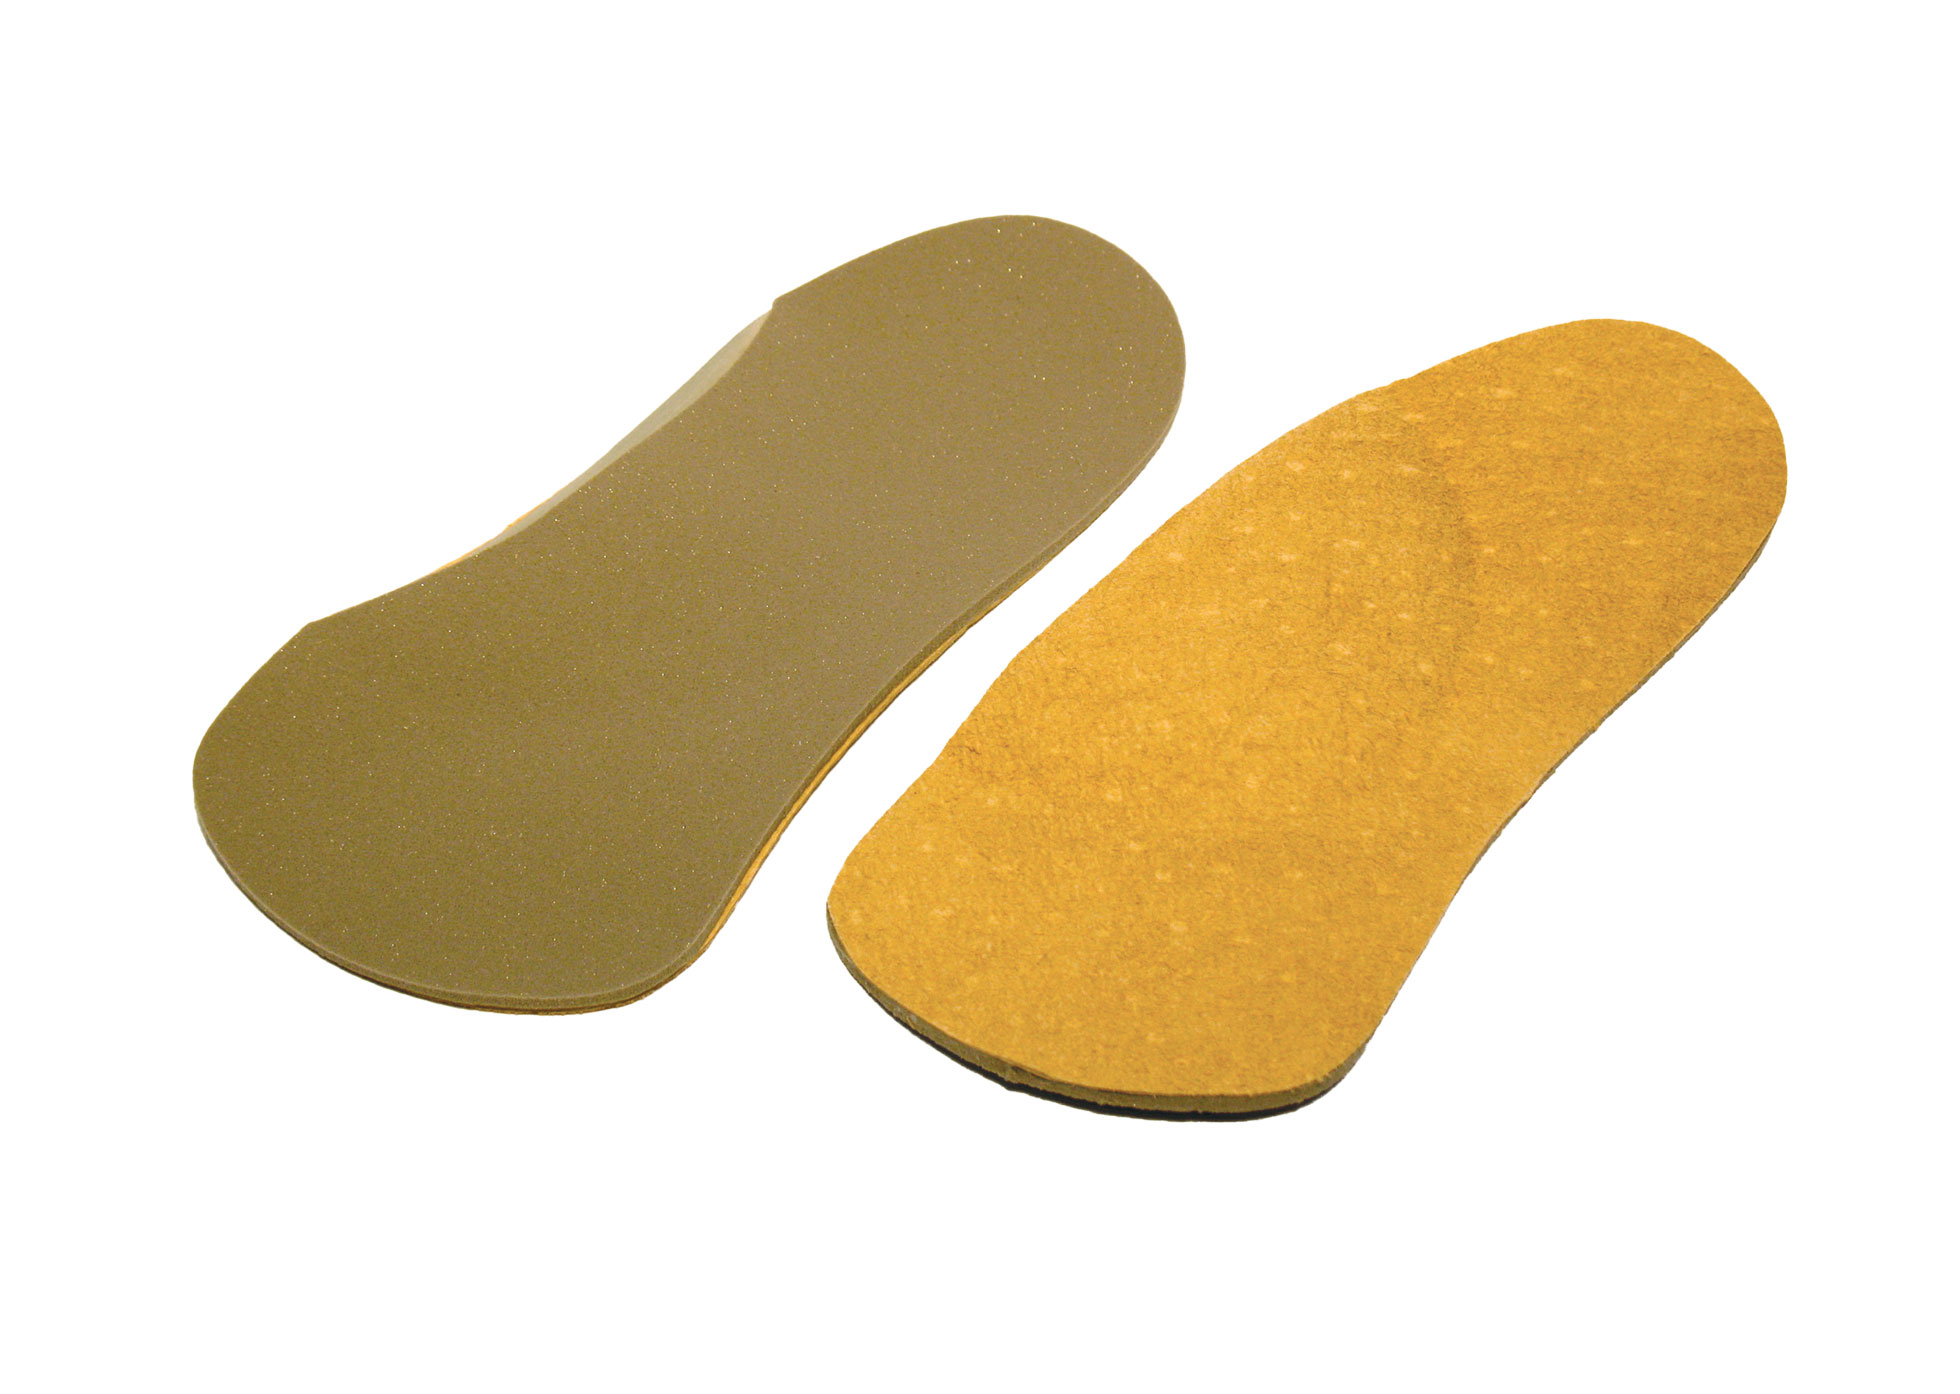 Haplabase Orthotic - Foot Supports - Model 407 - Per Pair - Valgus Pads - Mens 6 - 8